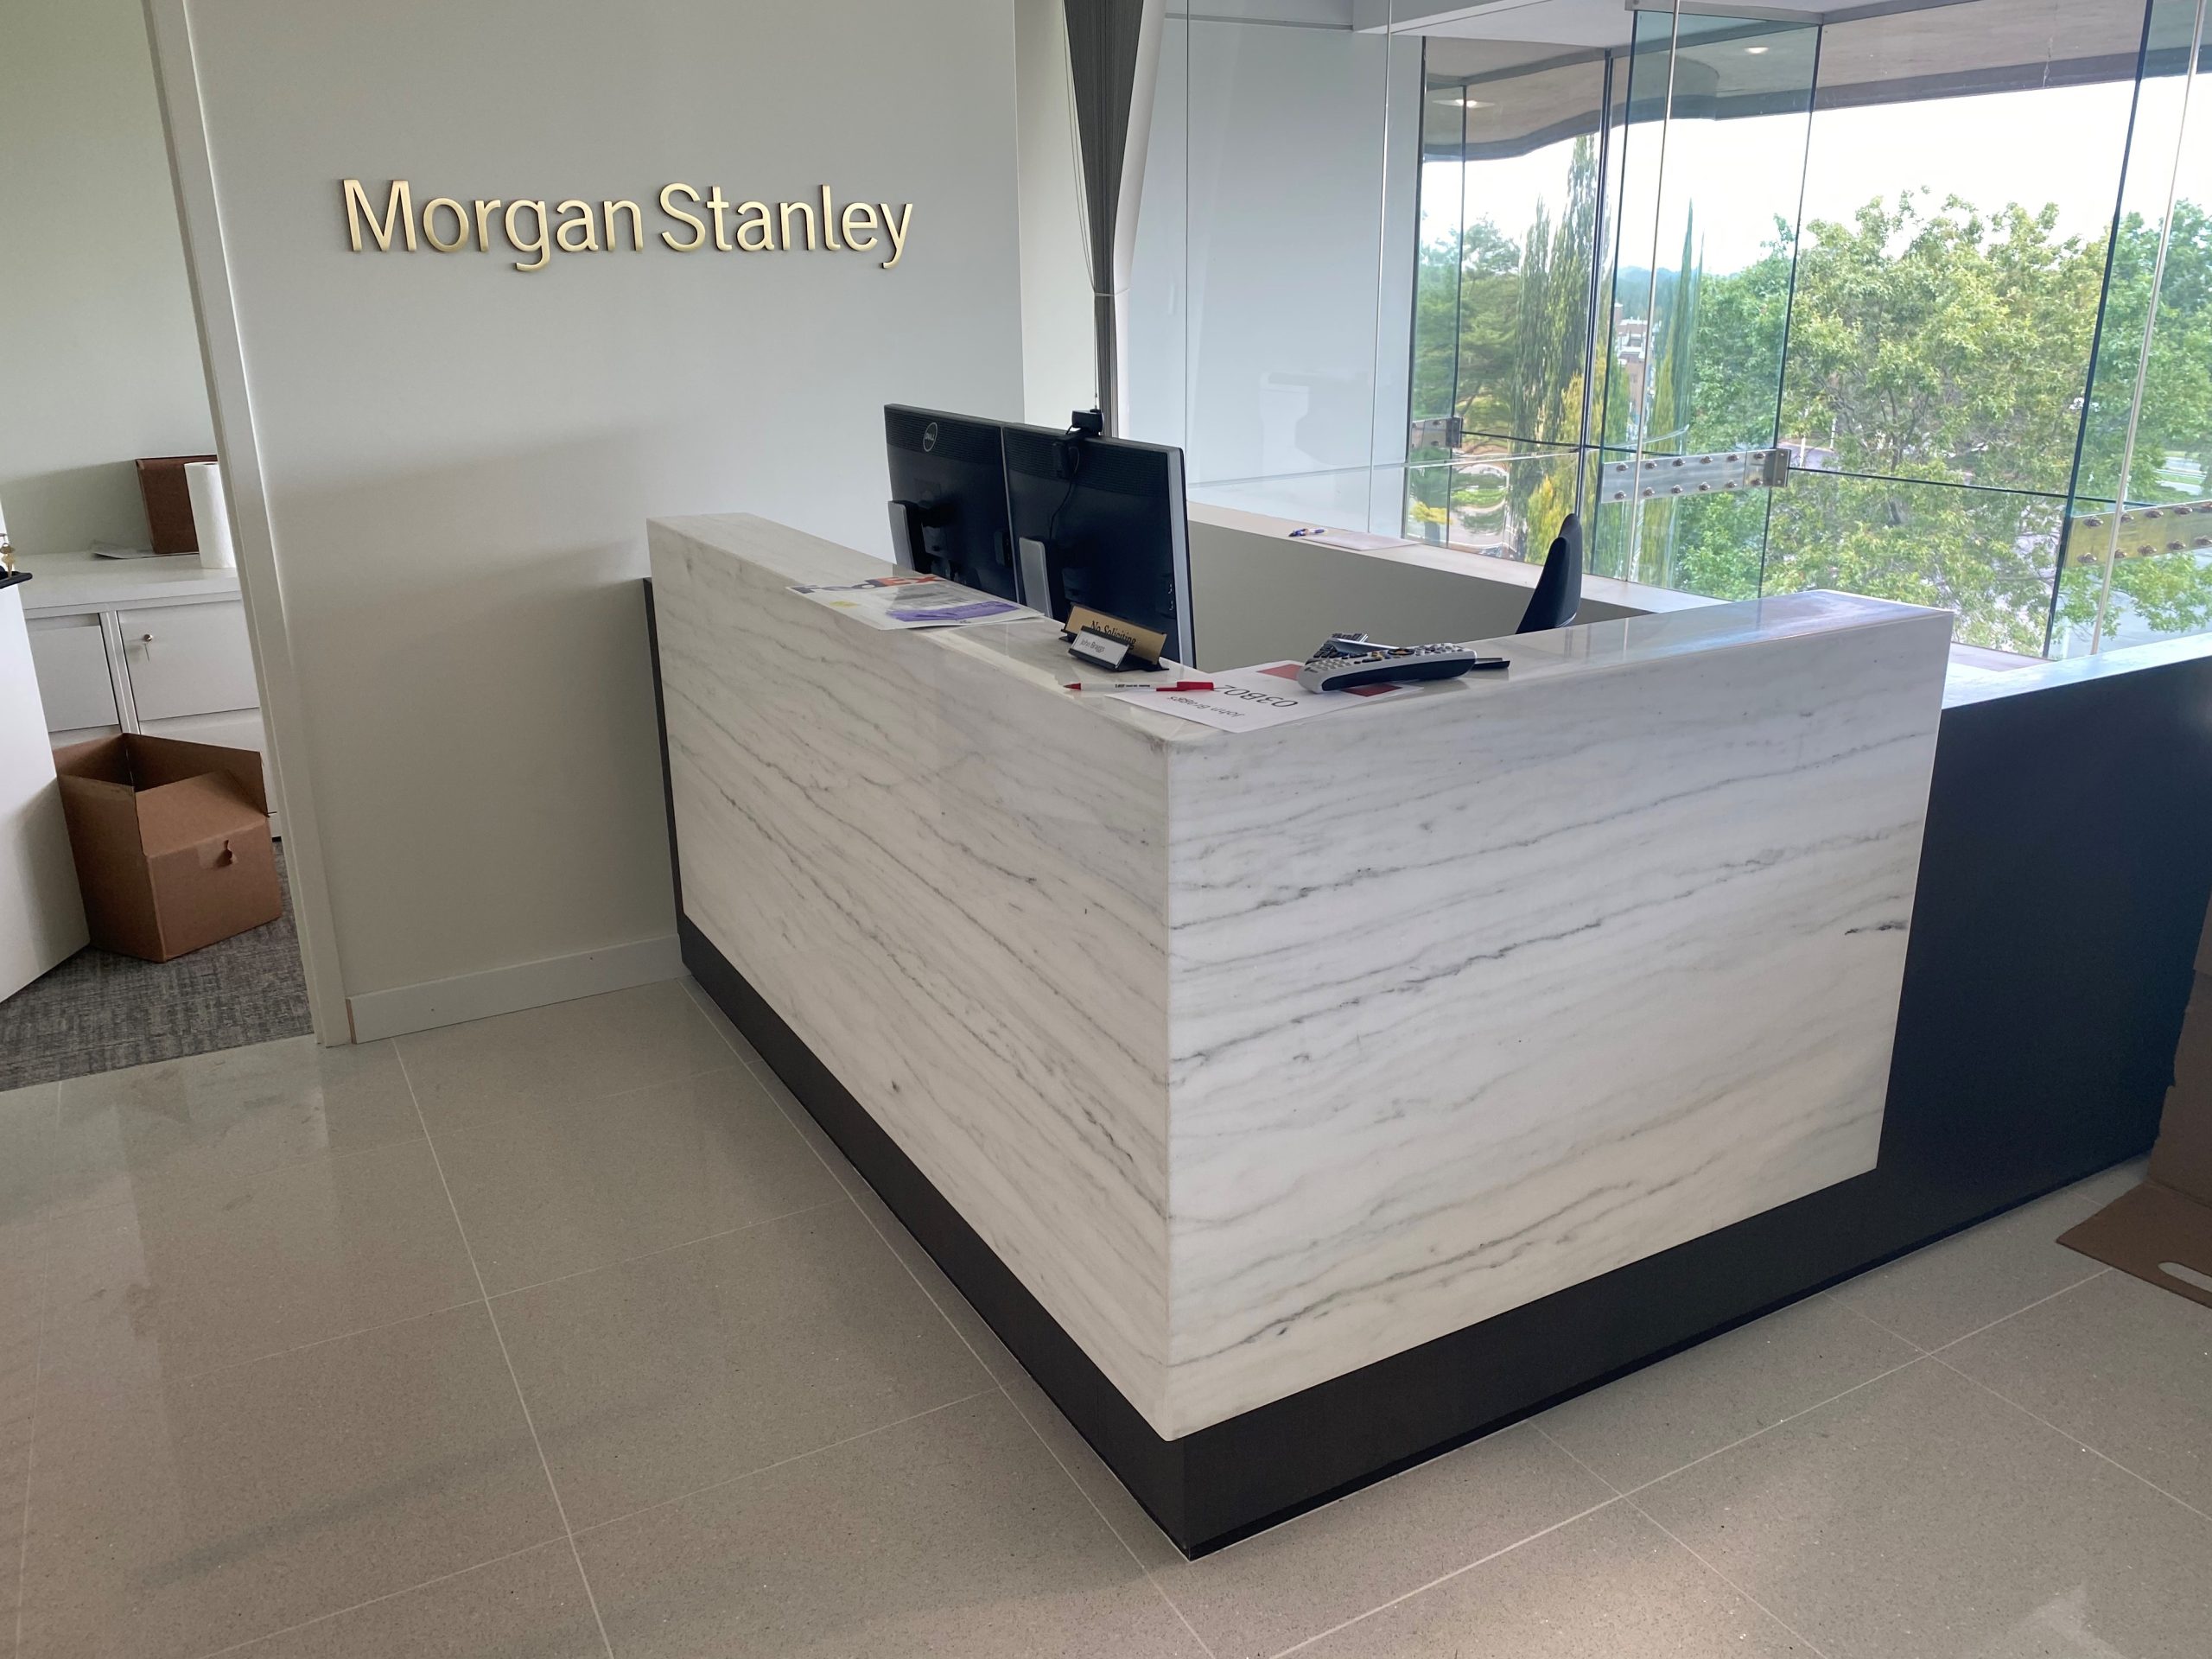 Morgan Stanley, Hauppauge, NY, Oct 2021